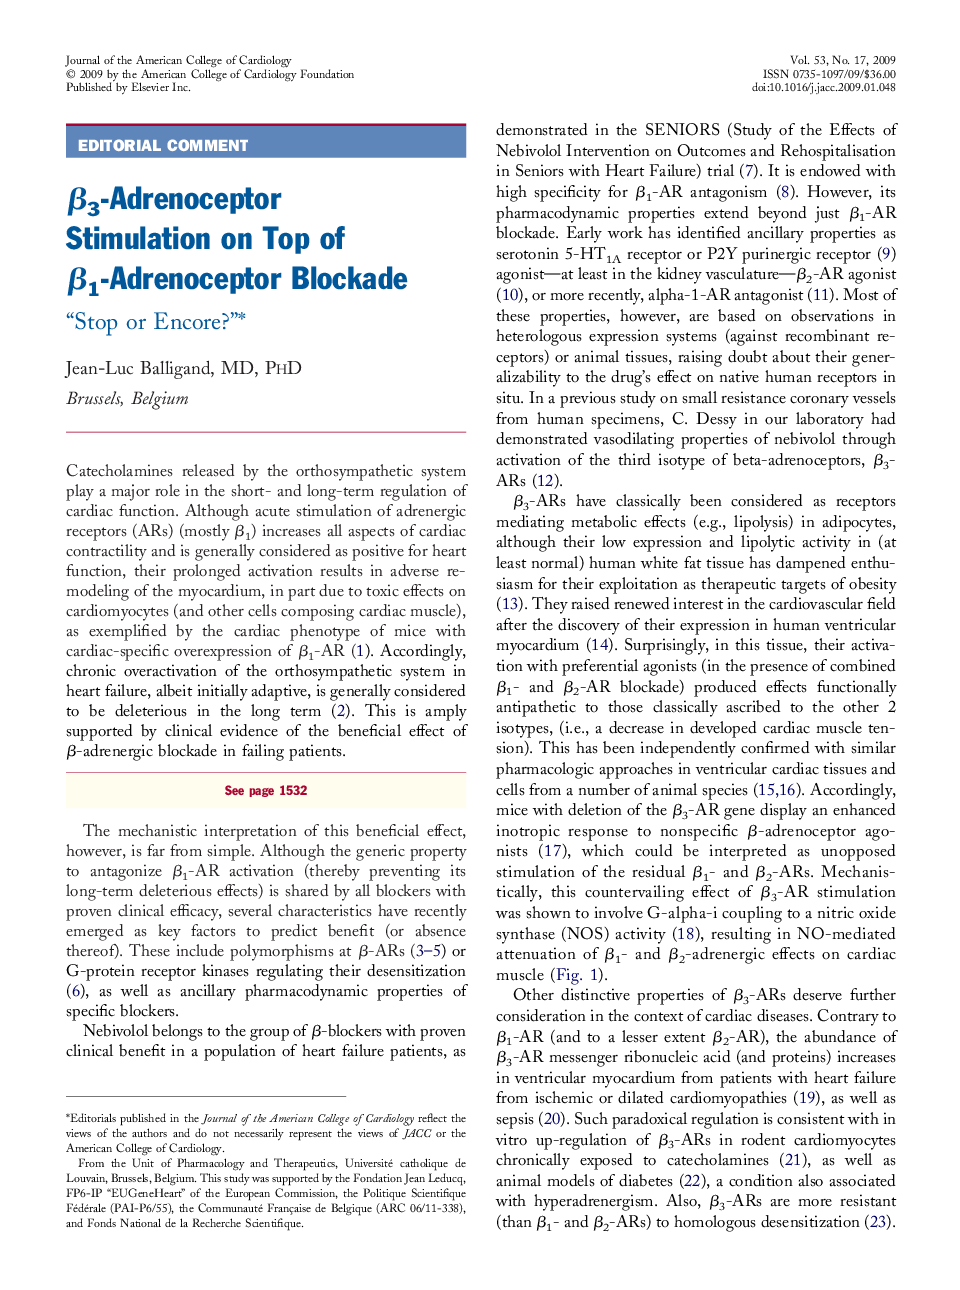 Î²3-Adrenoceptor Stimulation on Top of Î²1-Adrenoceptor Blockade